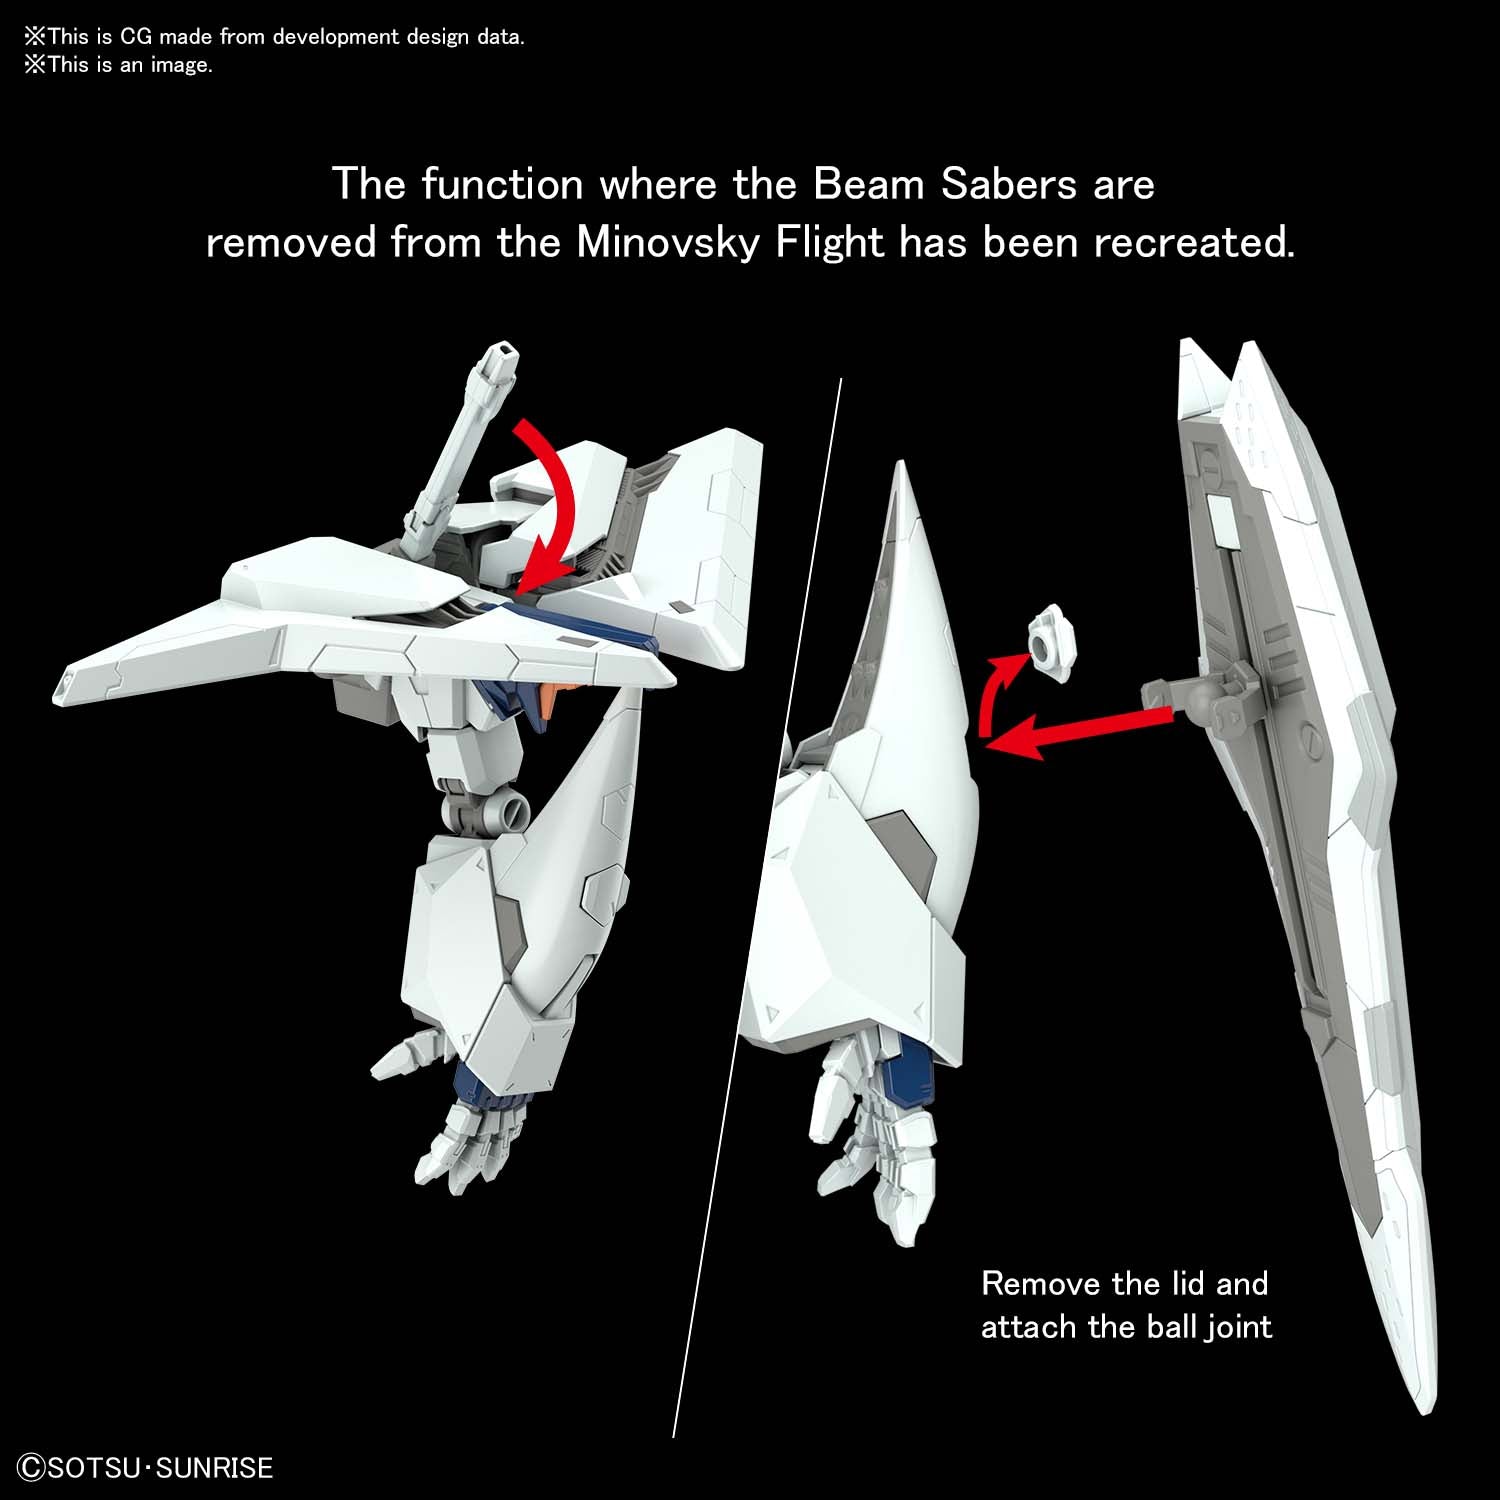 HGUC - RX-105 Xi Gundam